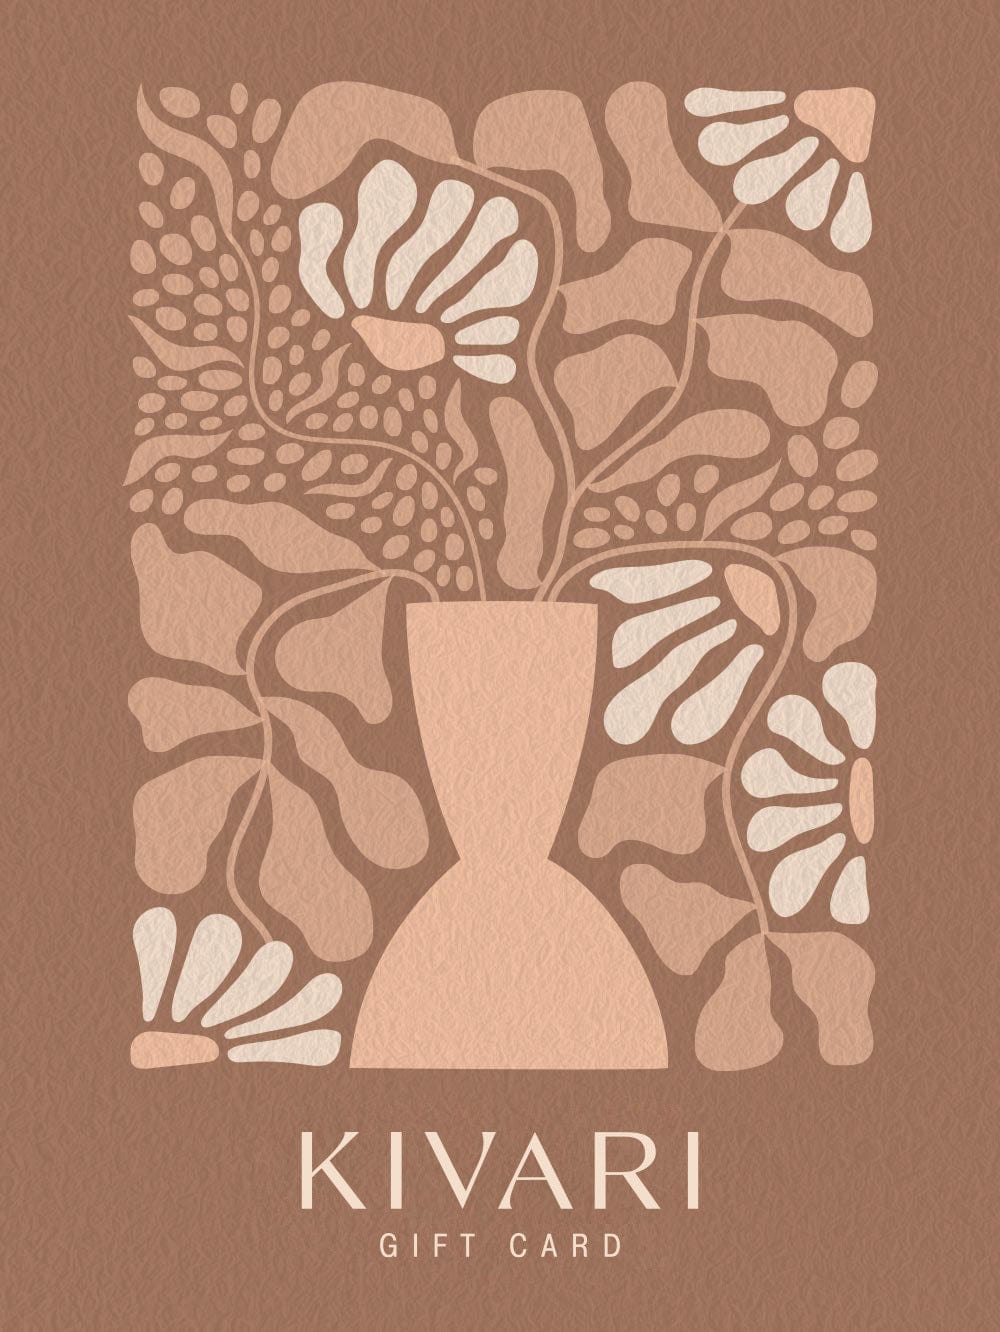 KIVARI Gift Card | Brown background with floral design